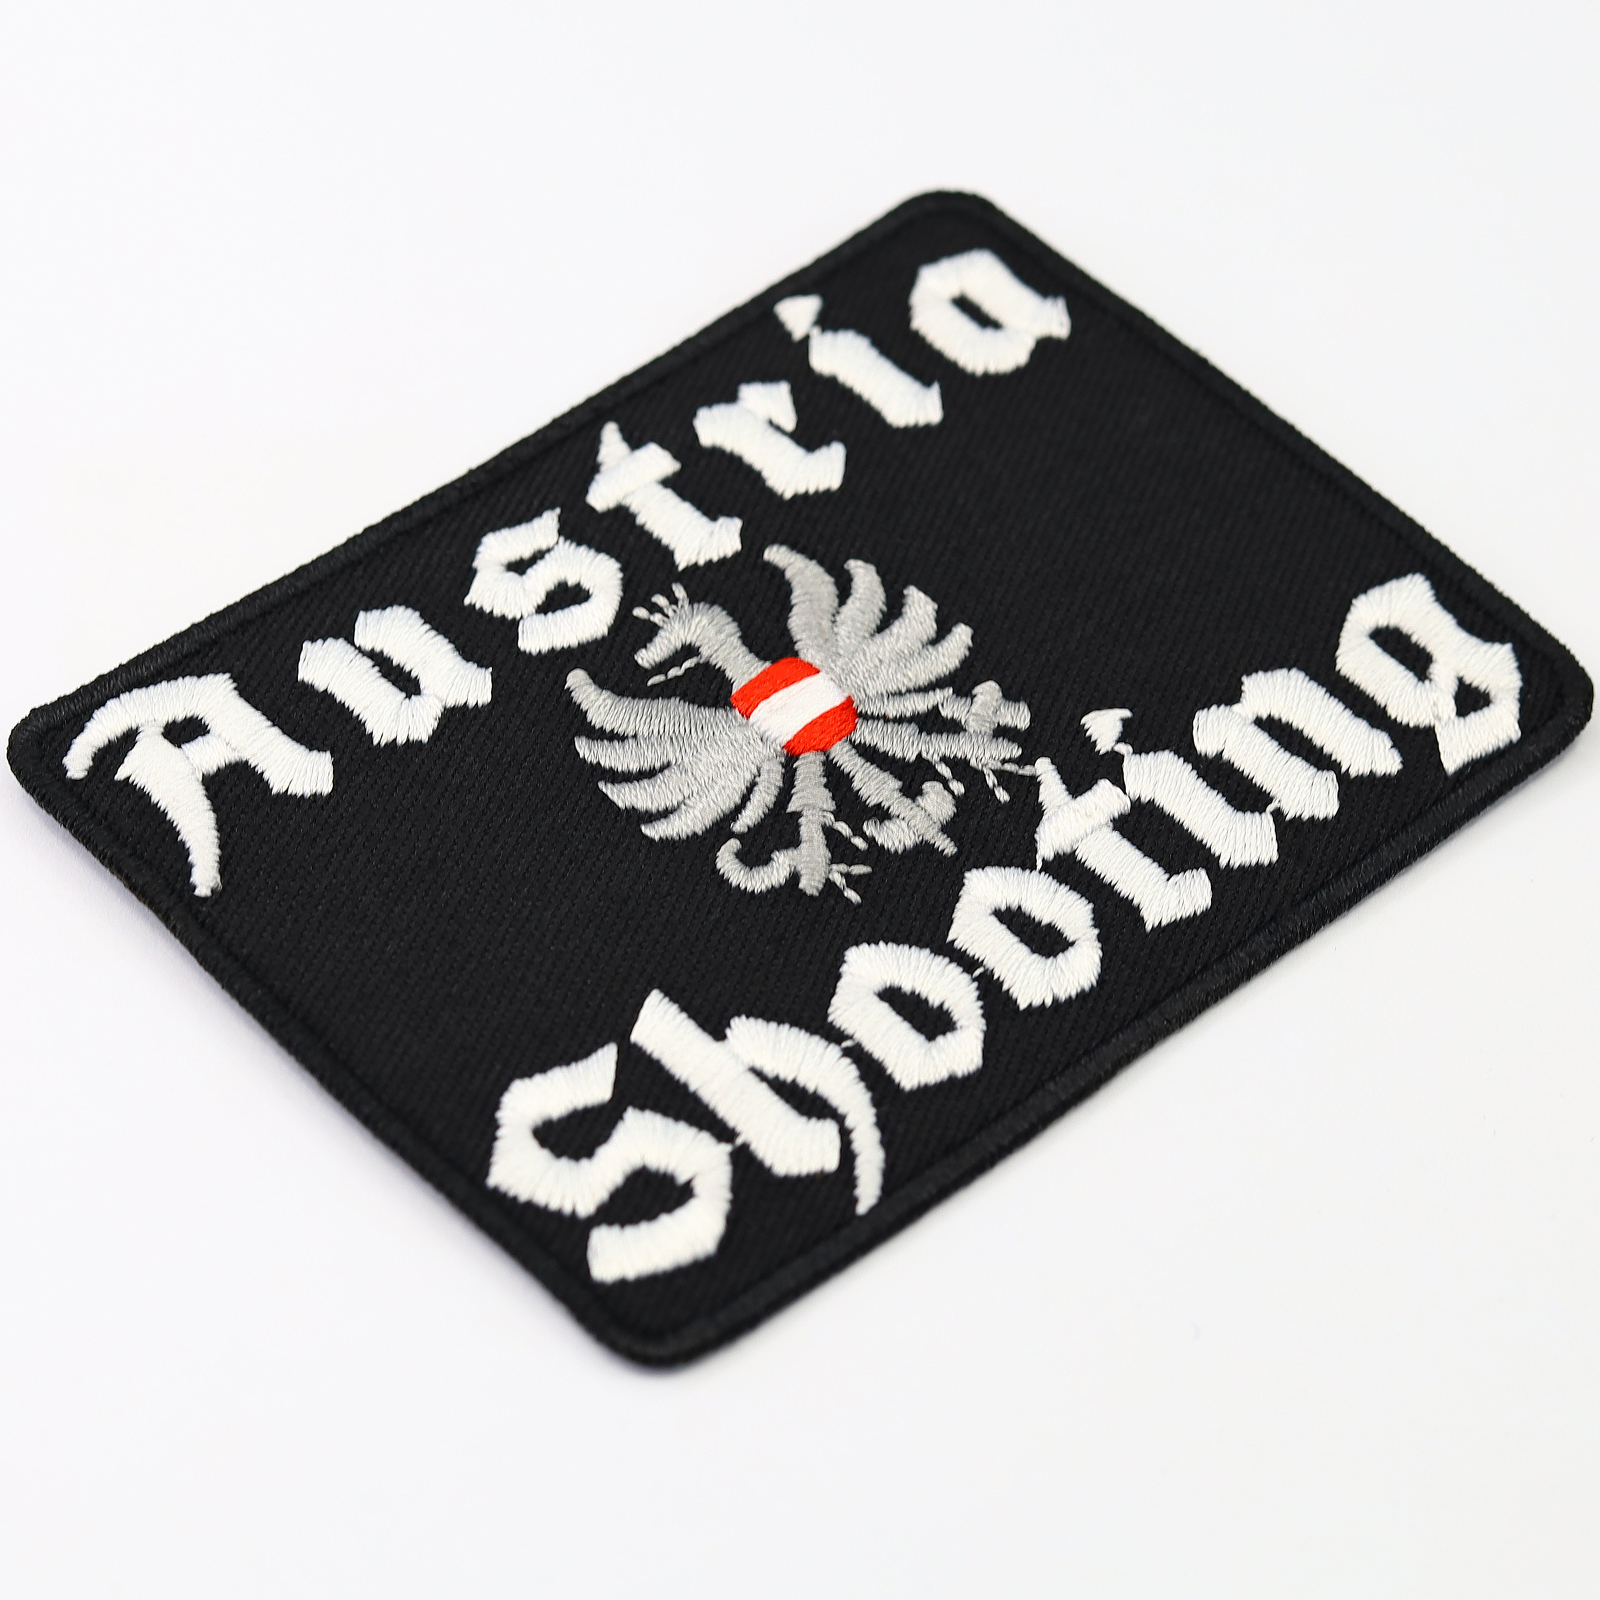 Austria shooting - Patch